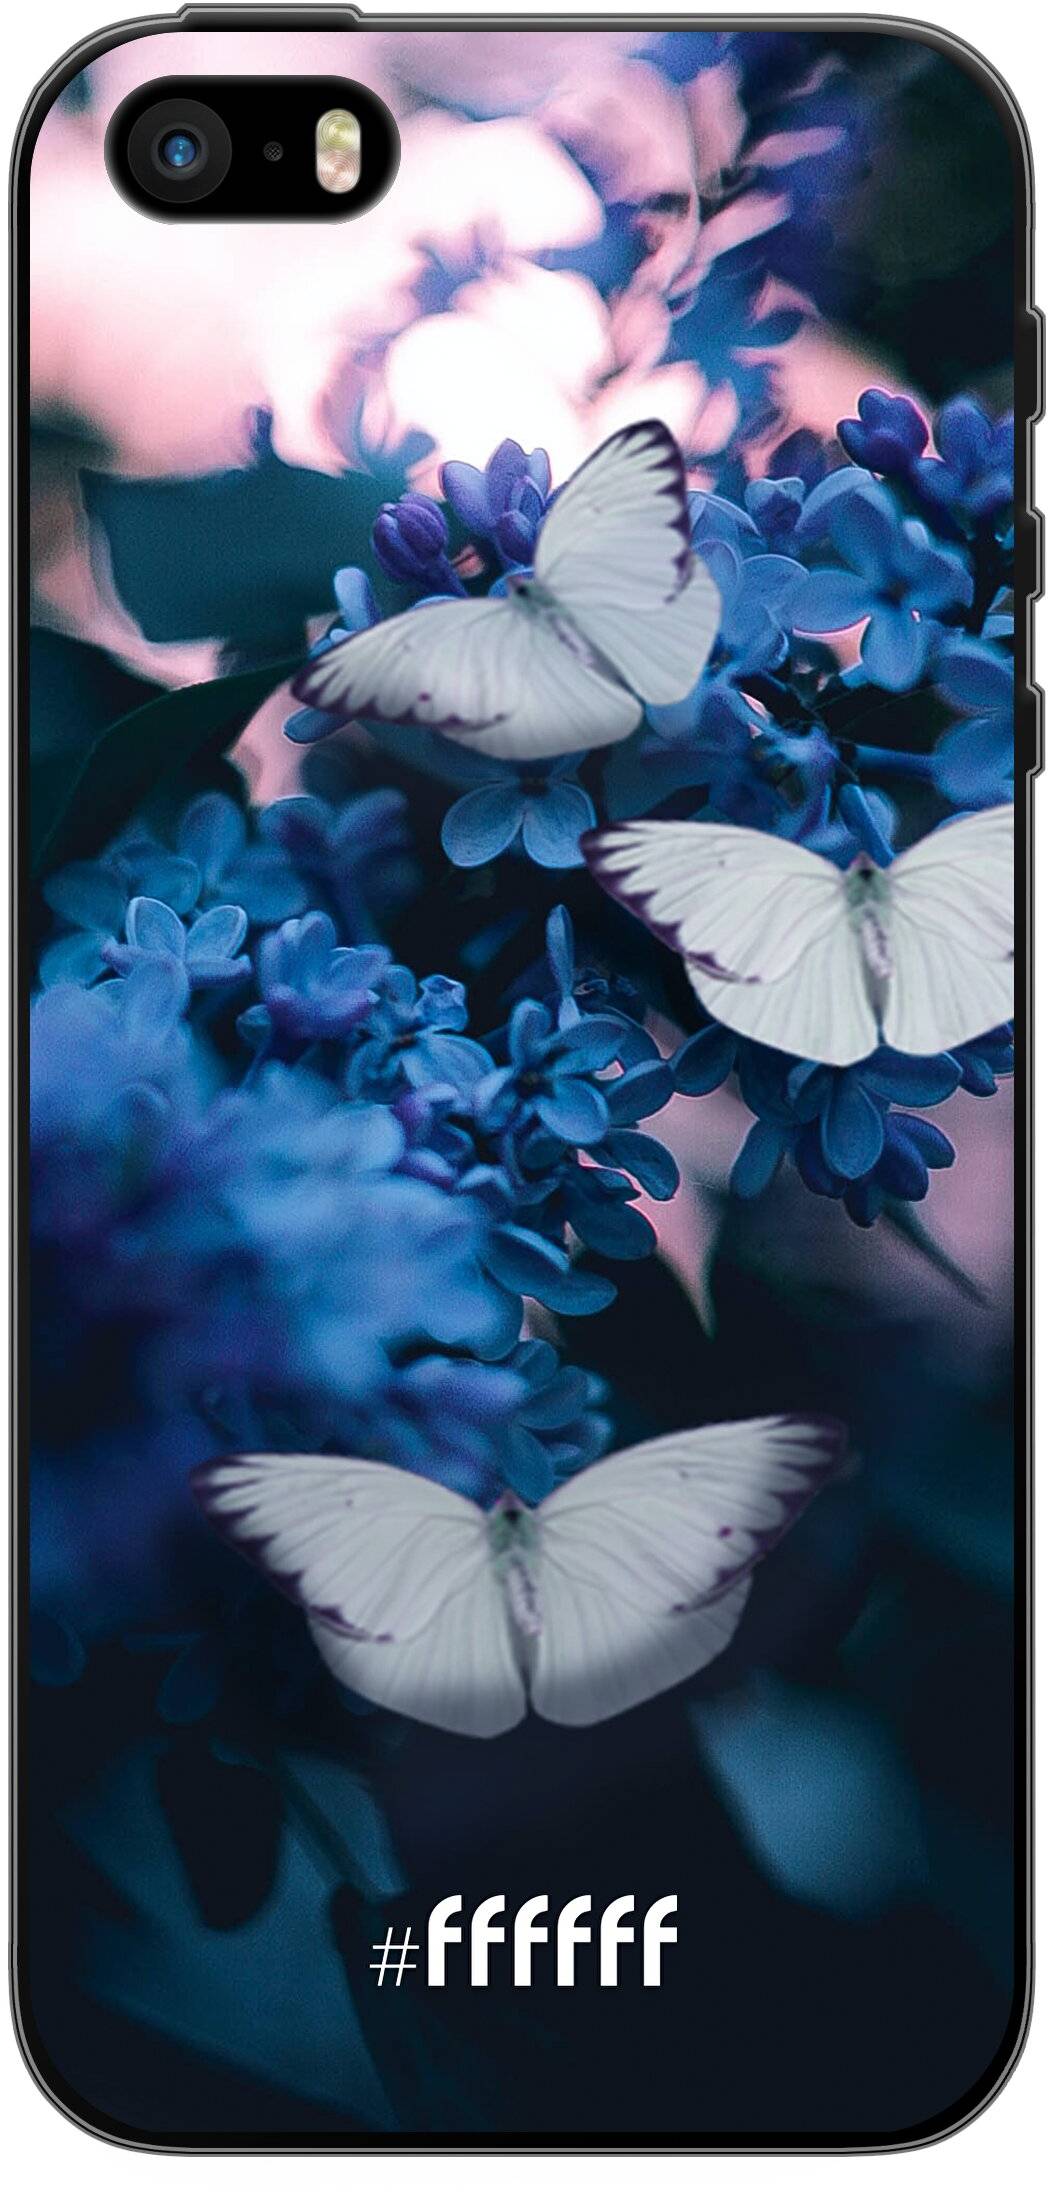 Blooming Butterflies iPhone 5